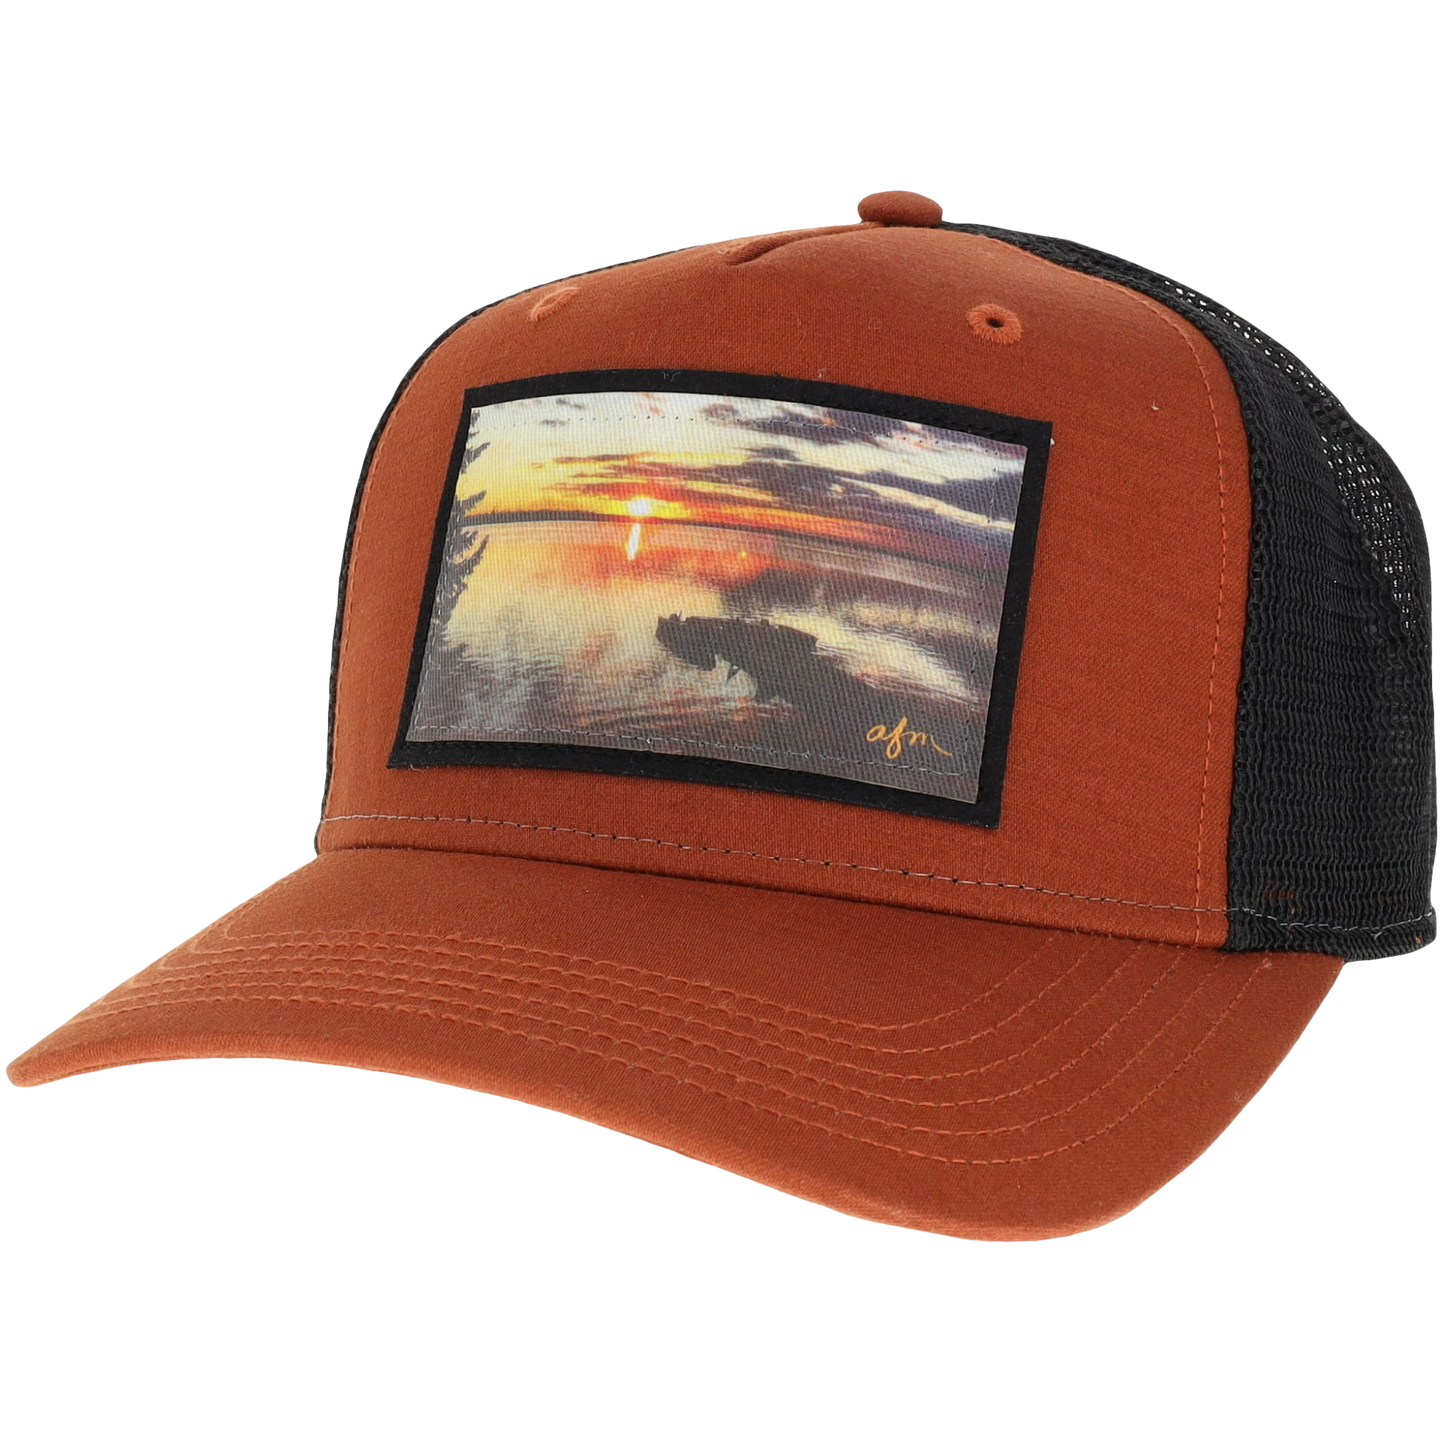 Pier Roadie Trucker Hat in Copper Slub/Black